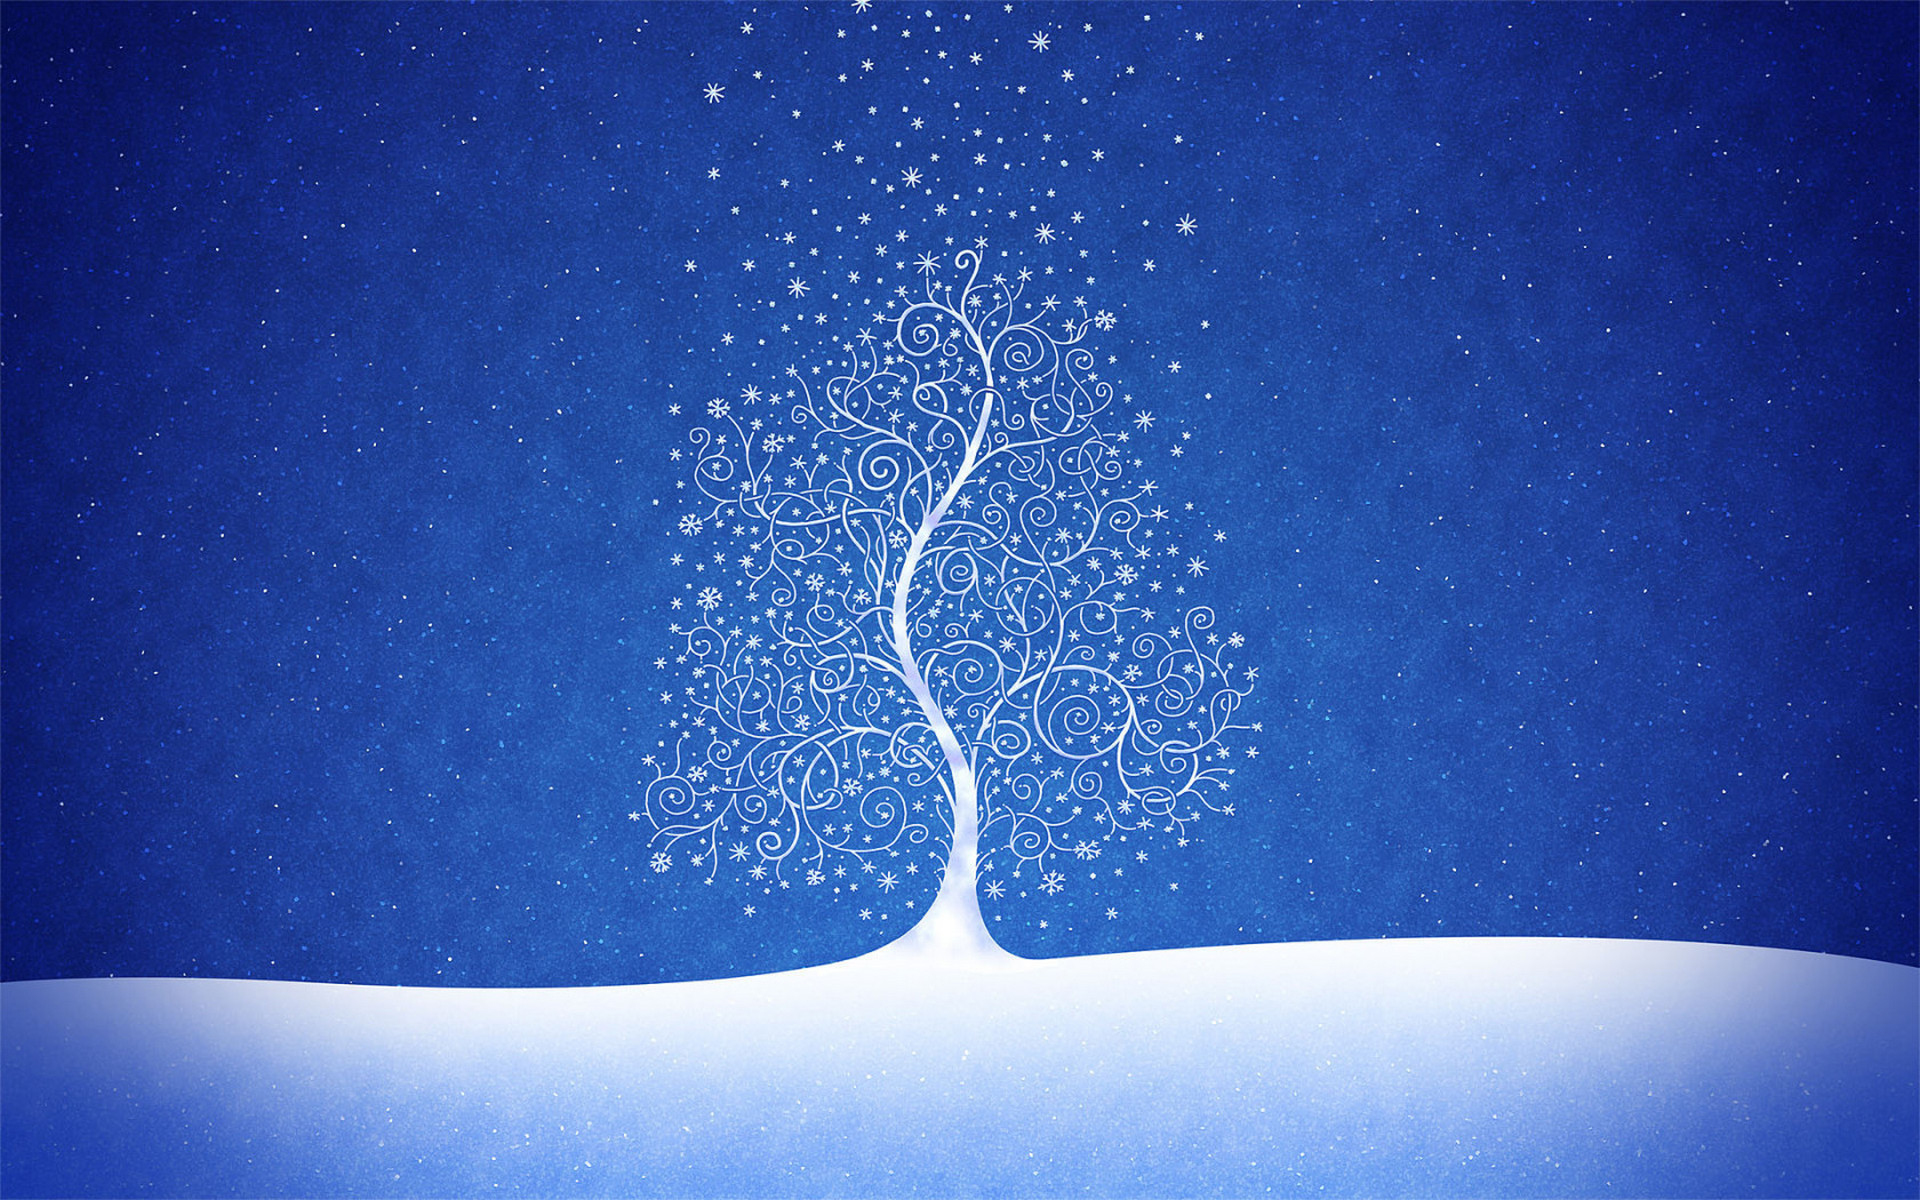 Wallpapers screensaver snow tree on the desktop